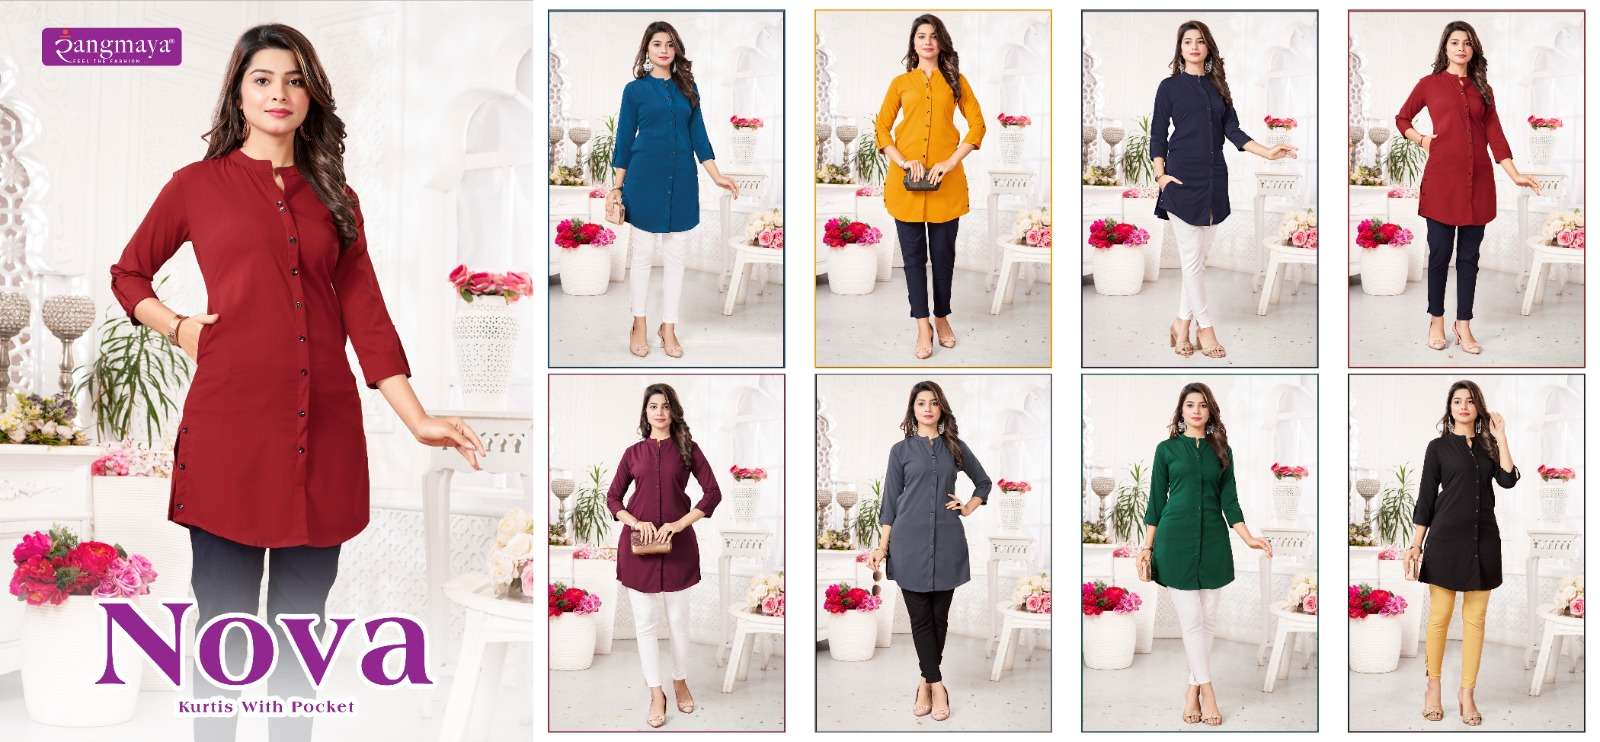 rangmaya nova 101-108 series designer short tops with pocket collection at wholesale price